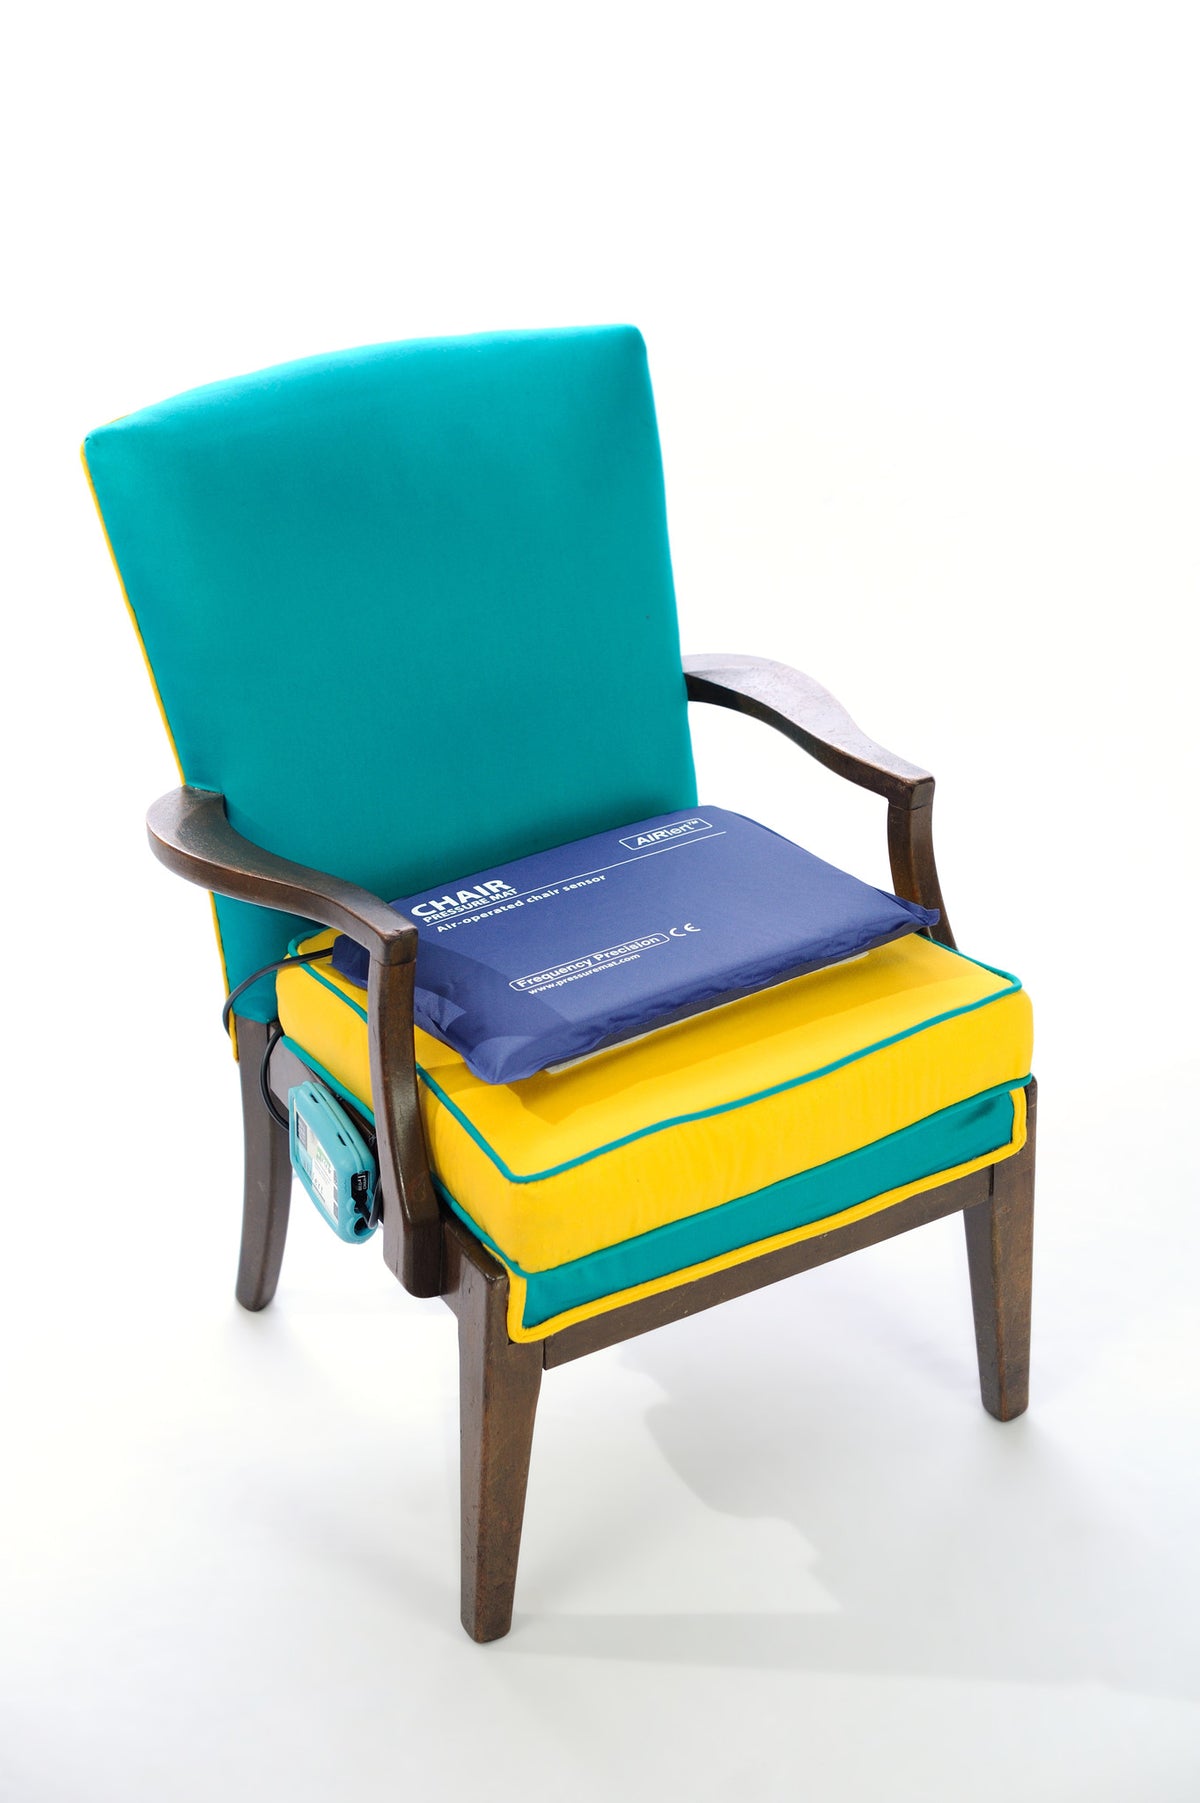 Chair Pressure Mat for Nurse Call Systems